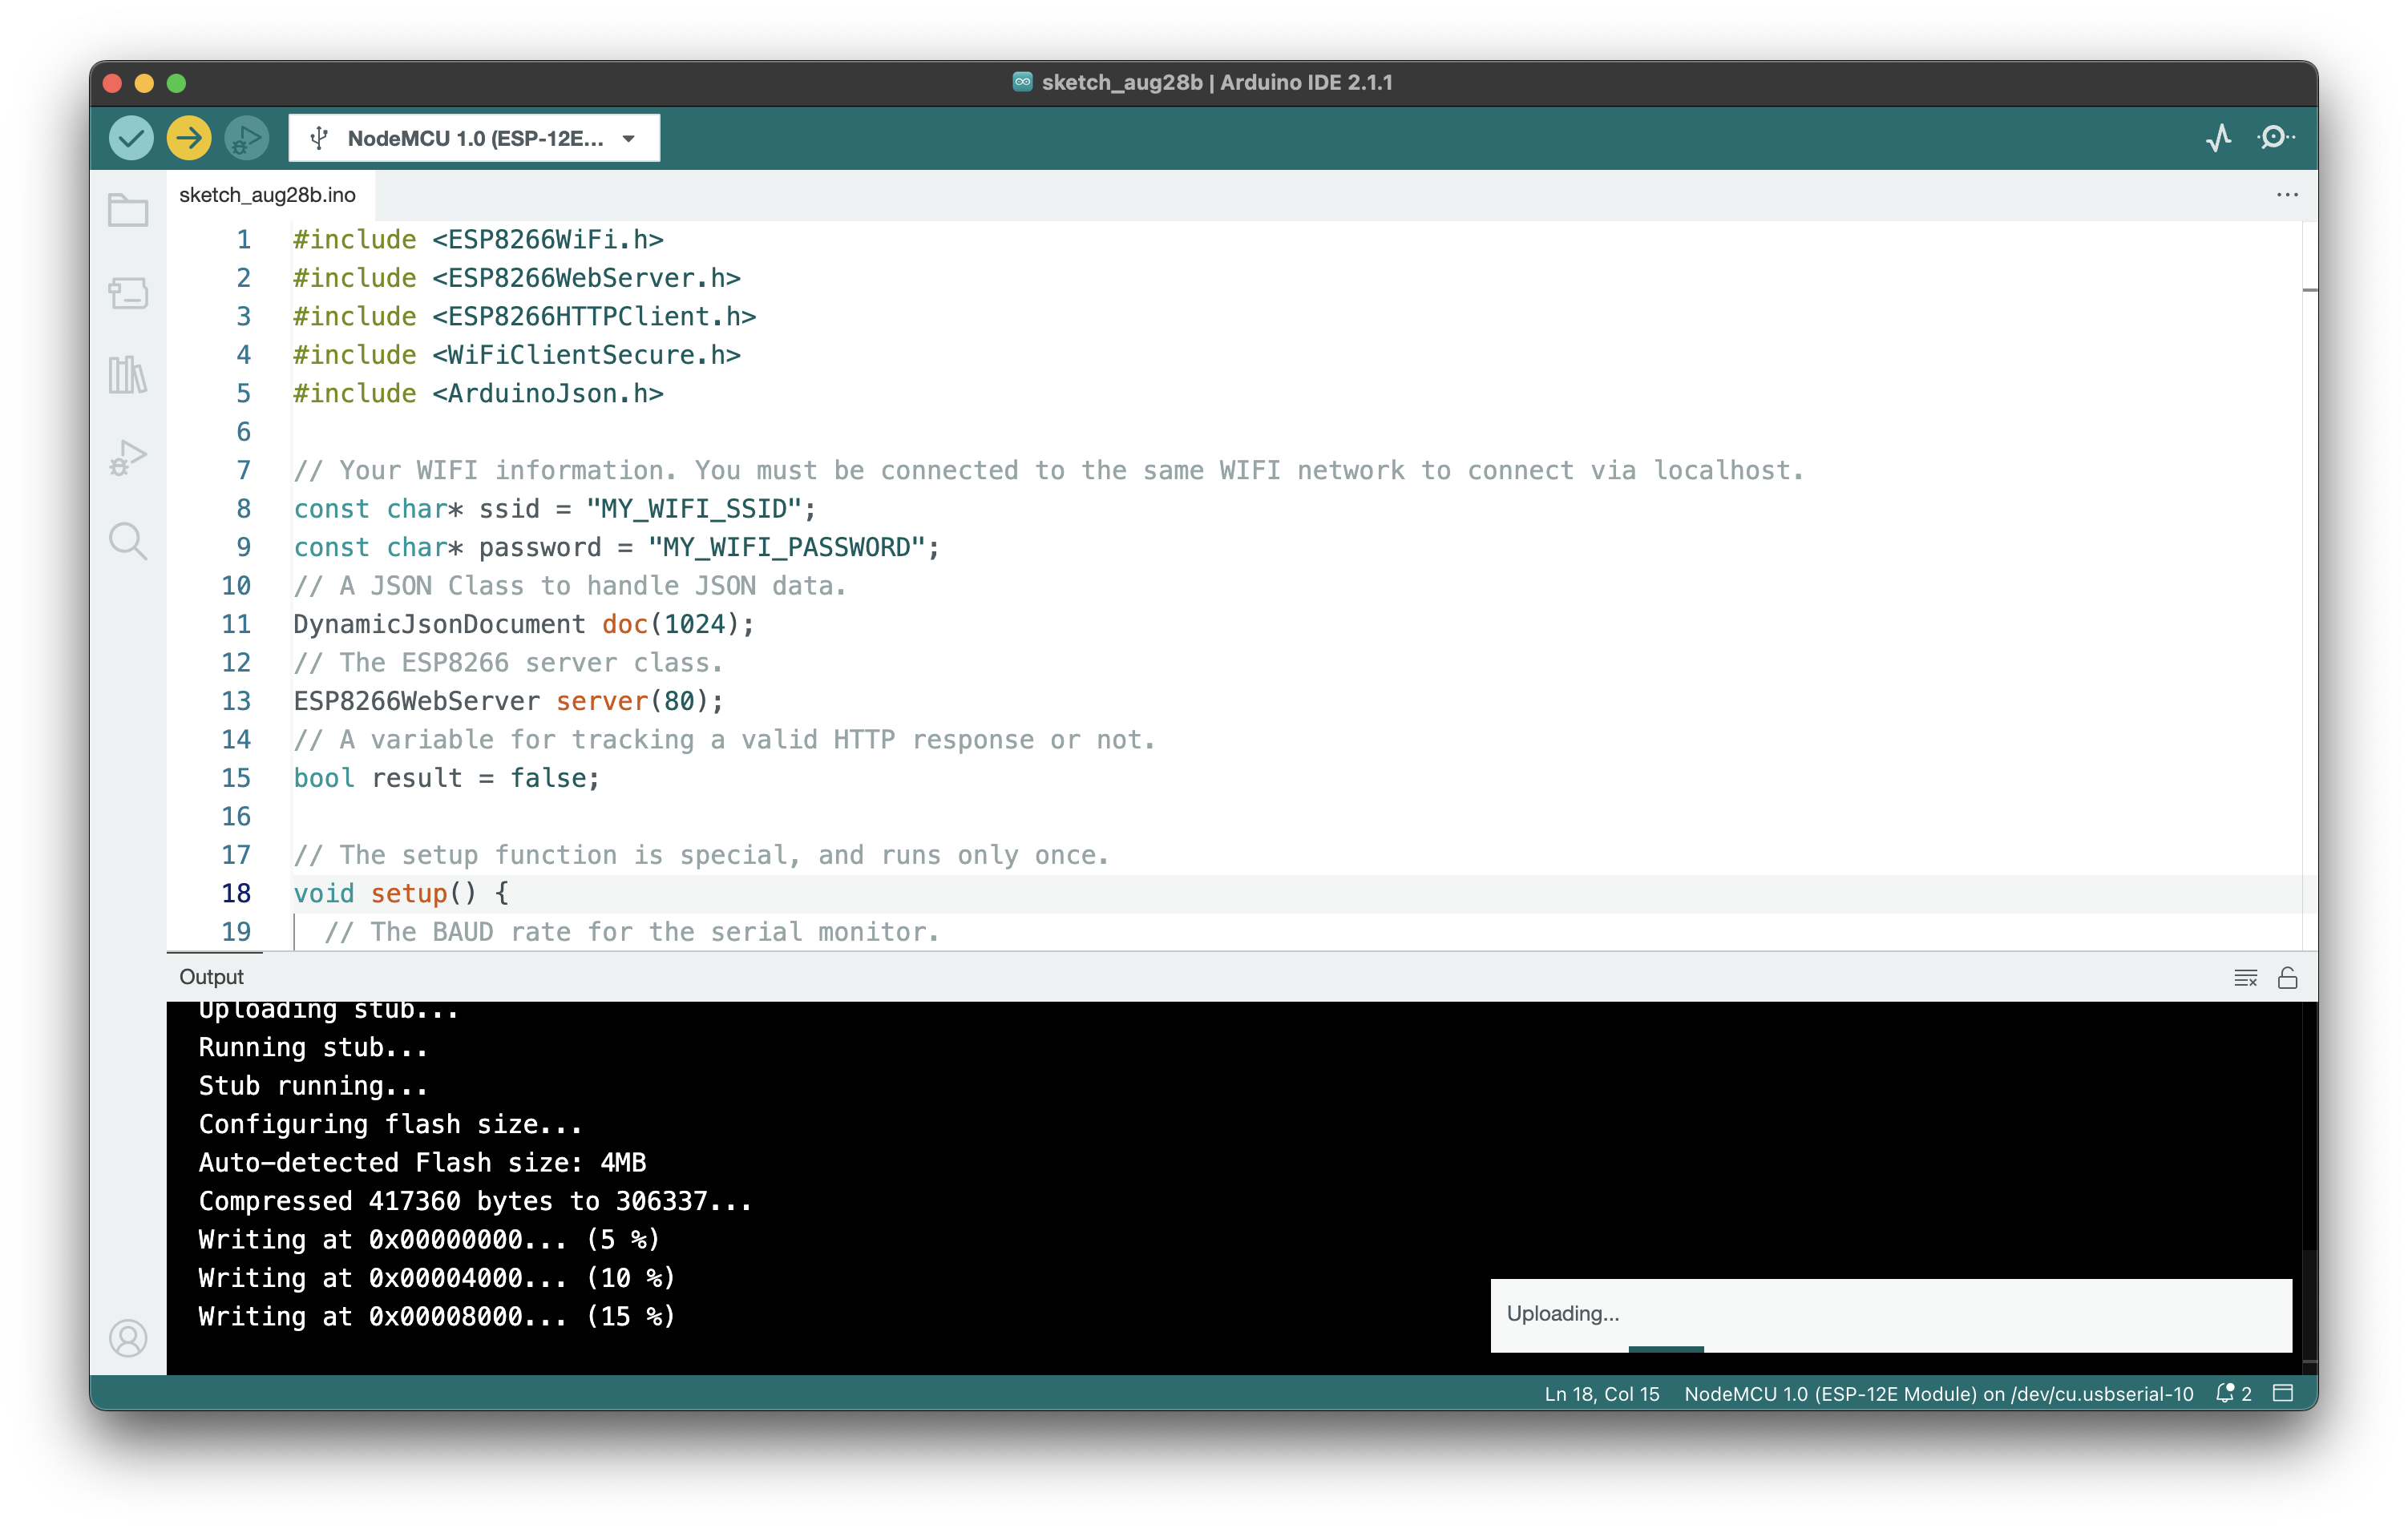 Screenshot: The upload progress in the Arduino IDE.